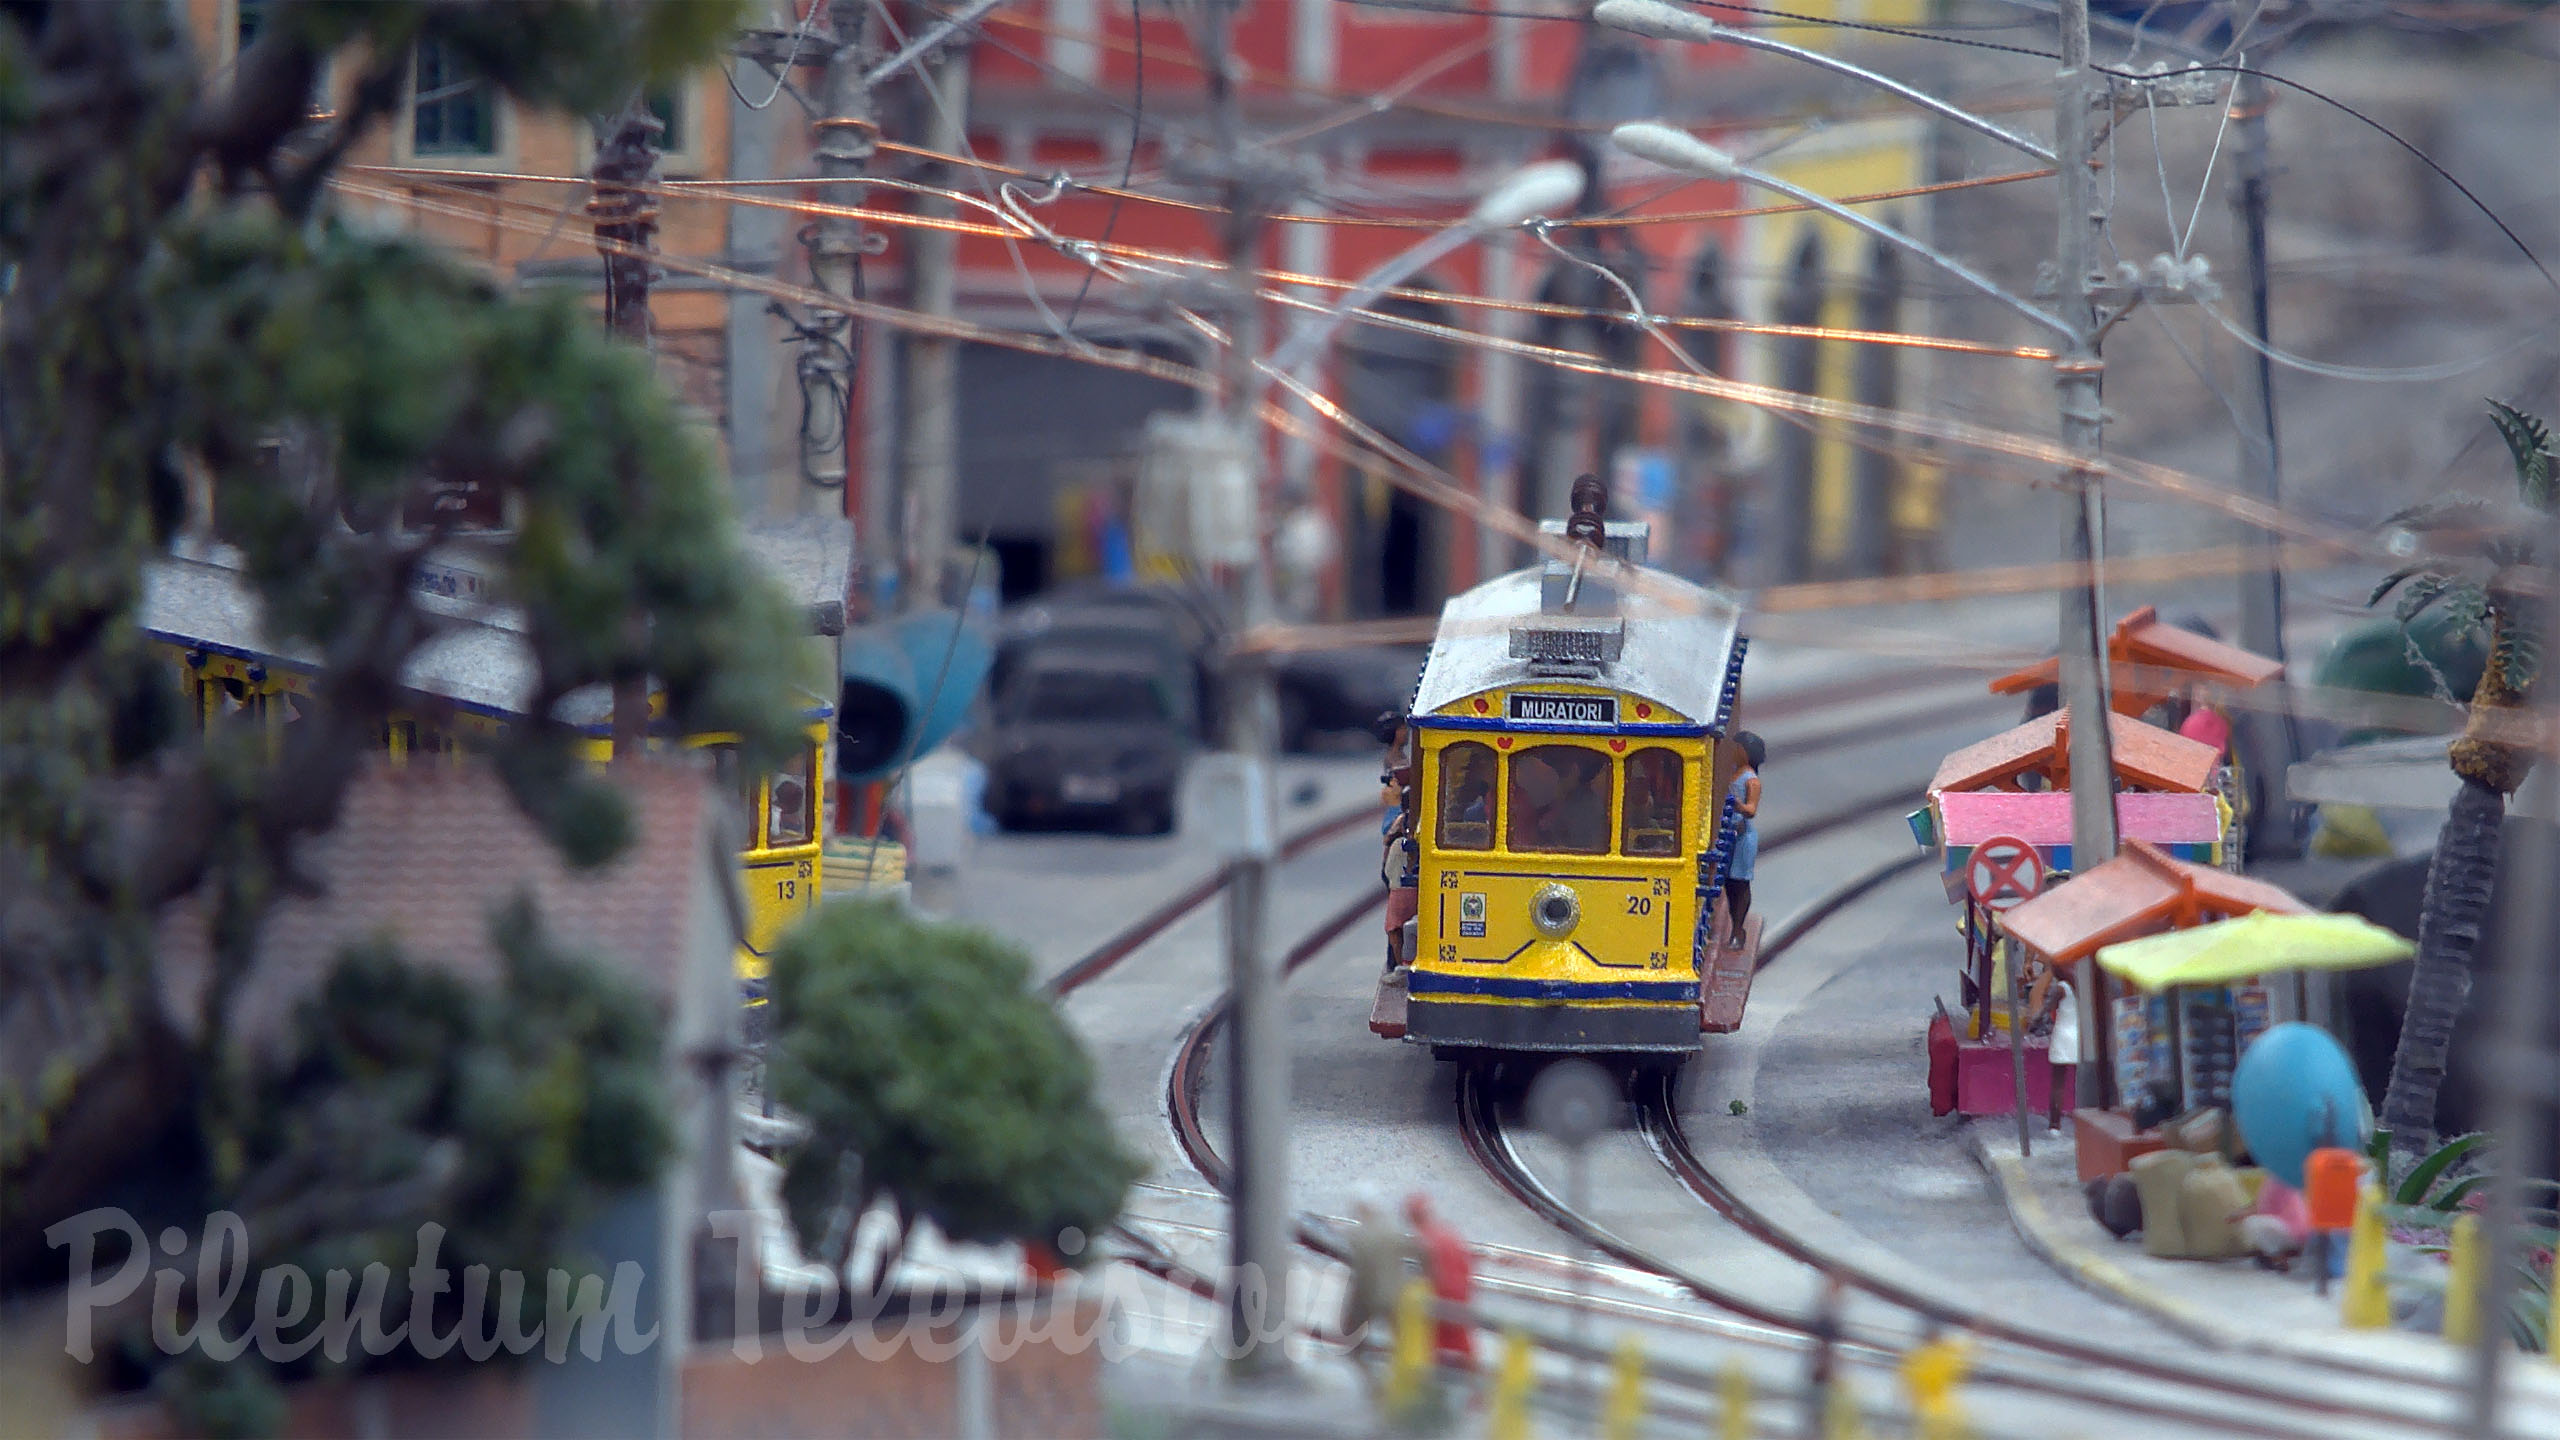 One of the oldest streetcars in the world - Bonde de Santa Teresa - The model tram of Rio de Janeiro